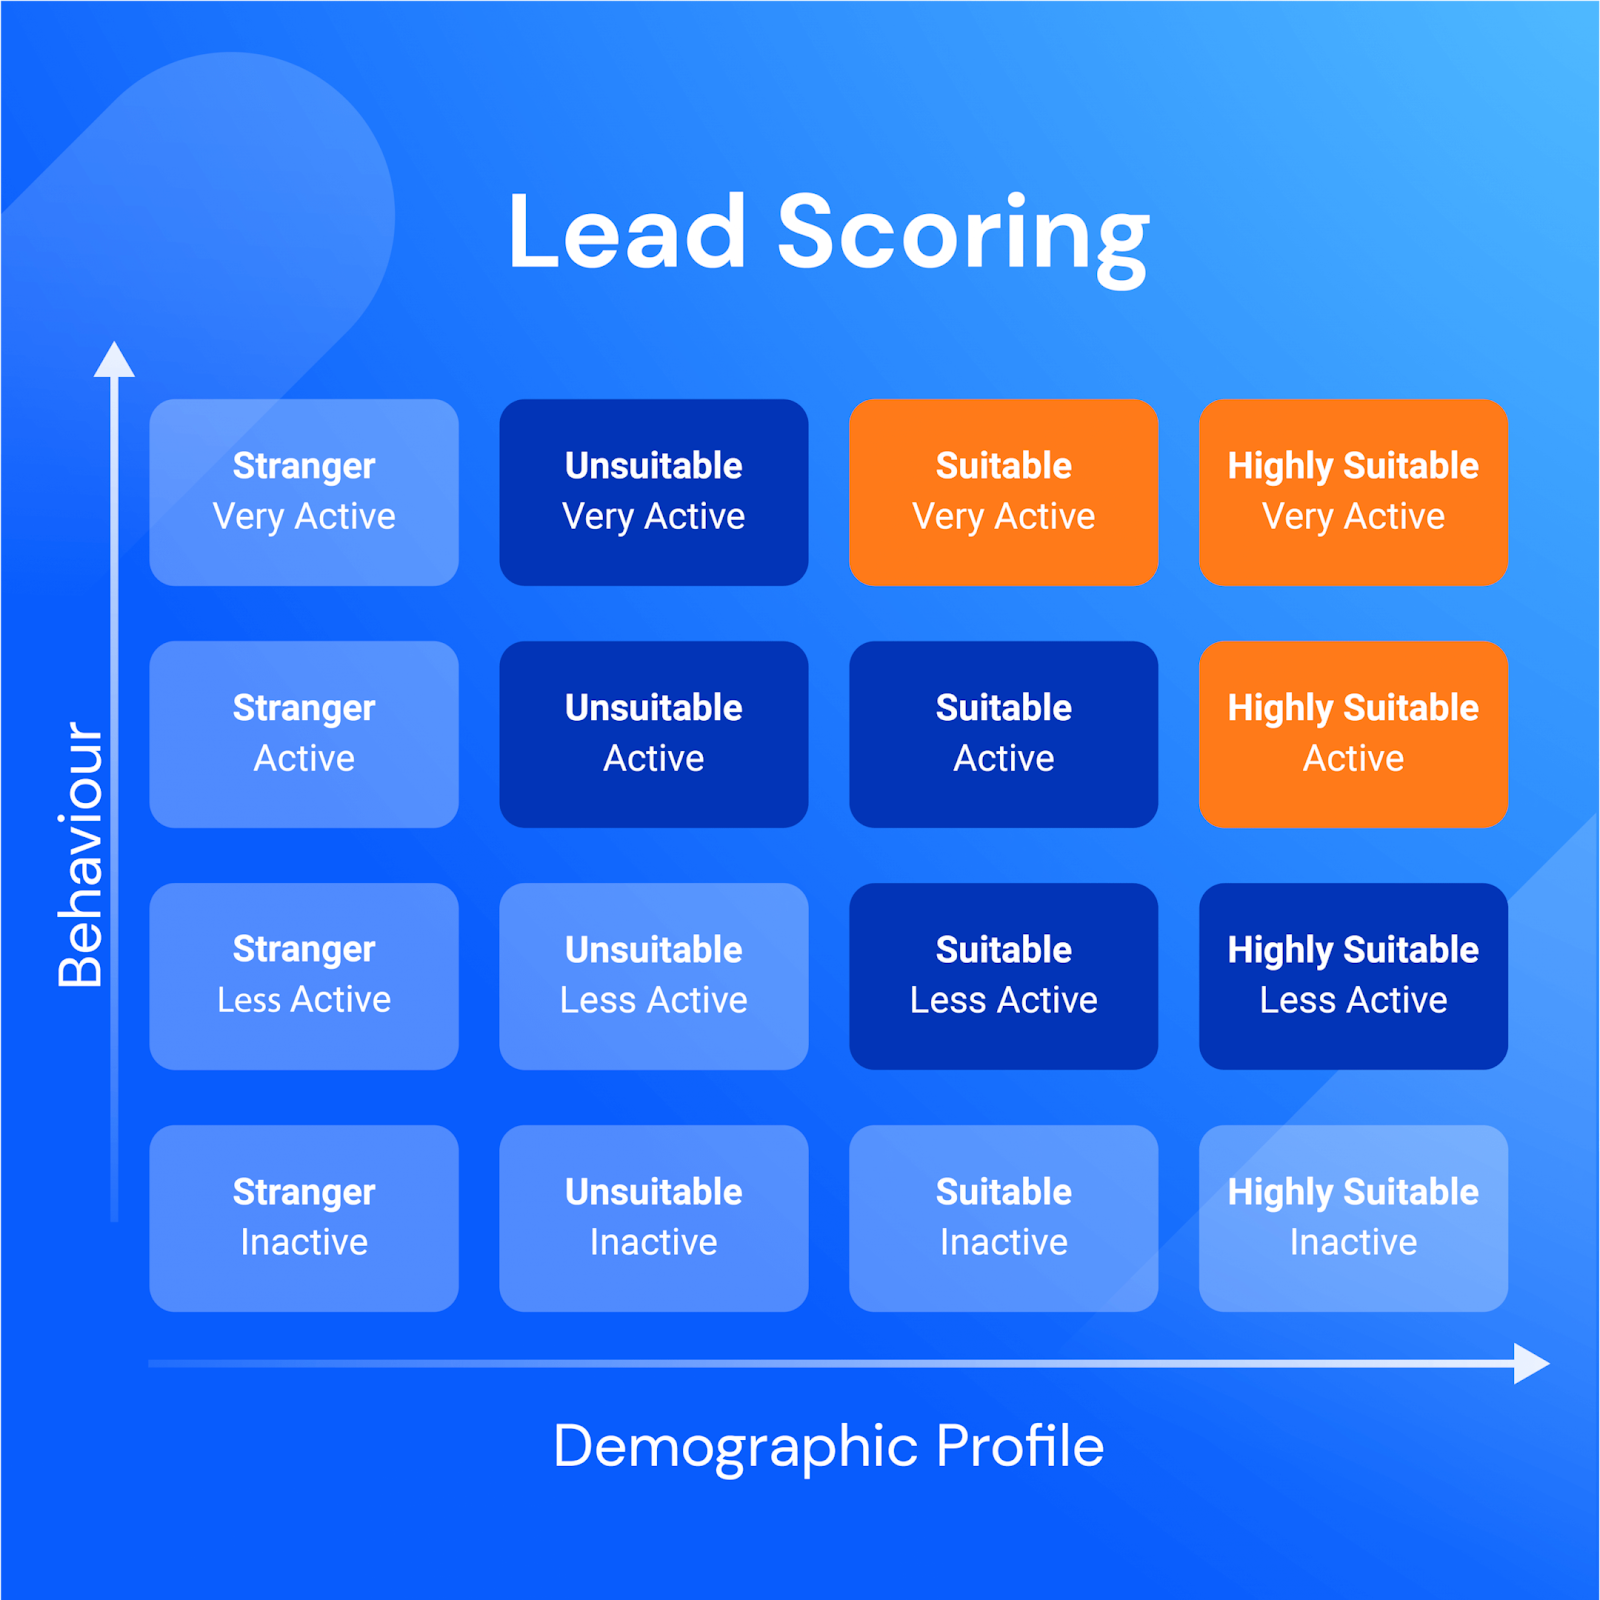 Create Your Lead Scoring Model